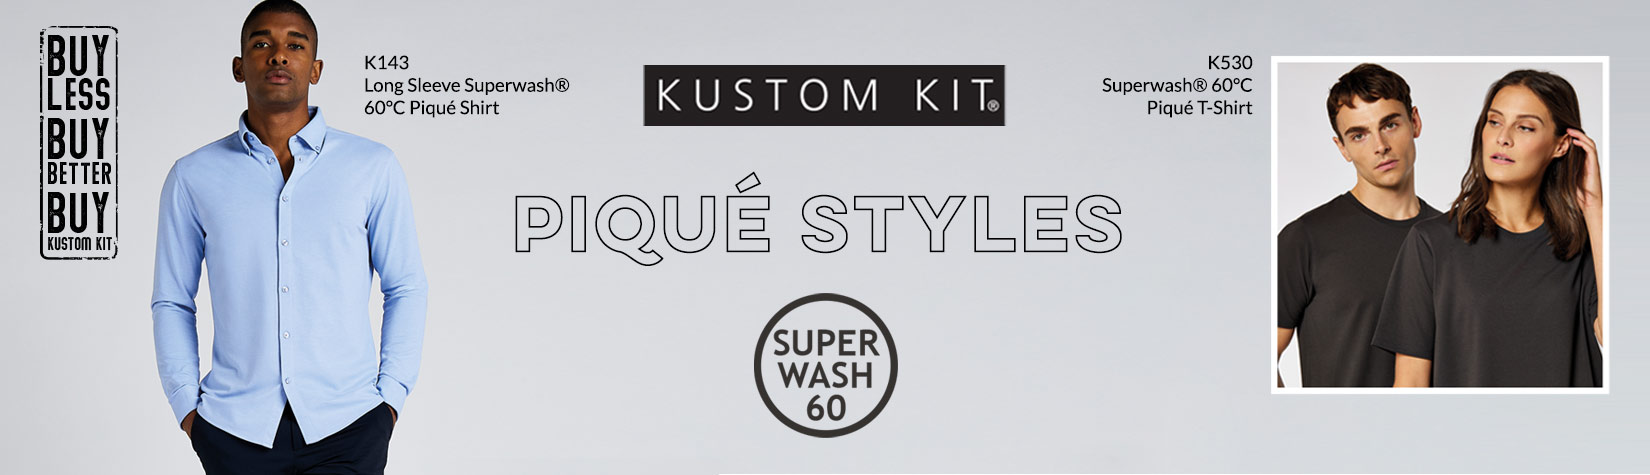 Kustom Kit - premium piqué styles